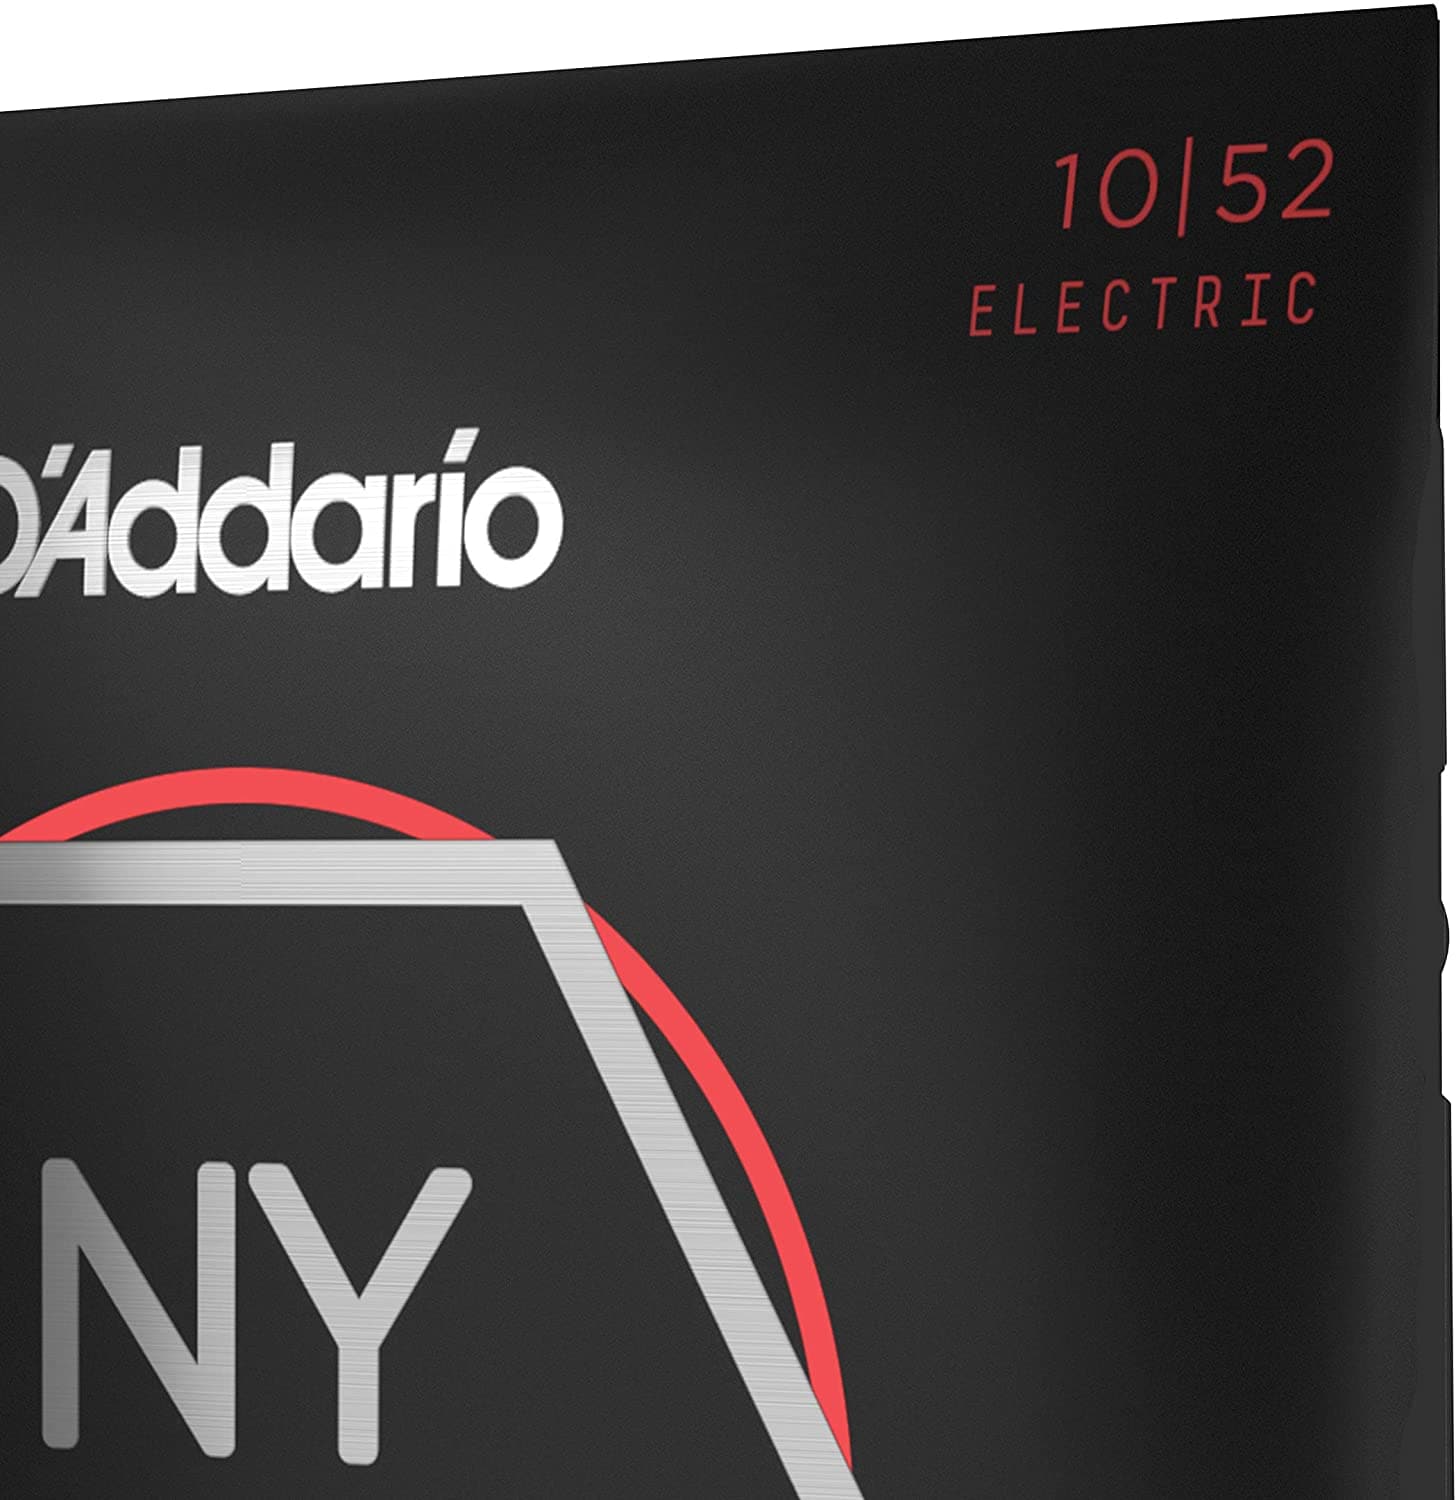 D'Addario NYXL1052 Electric Guitar Strings - Light Top / Heavy Bottom - 10-52